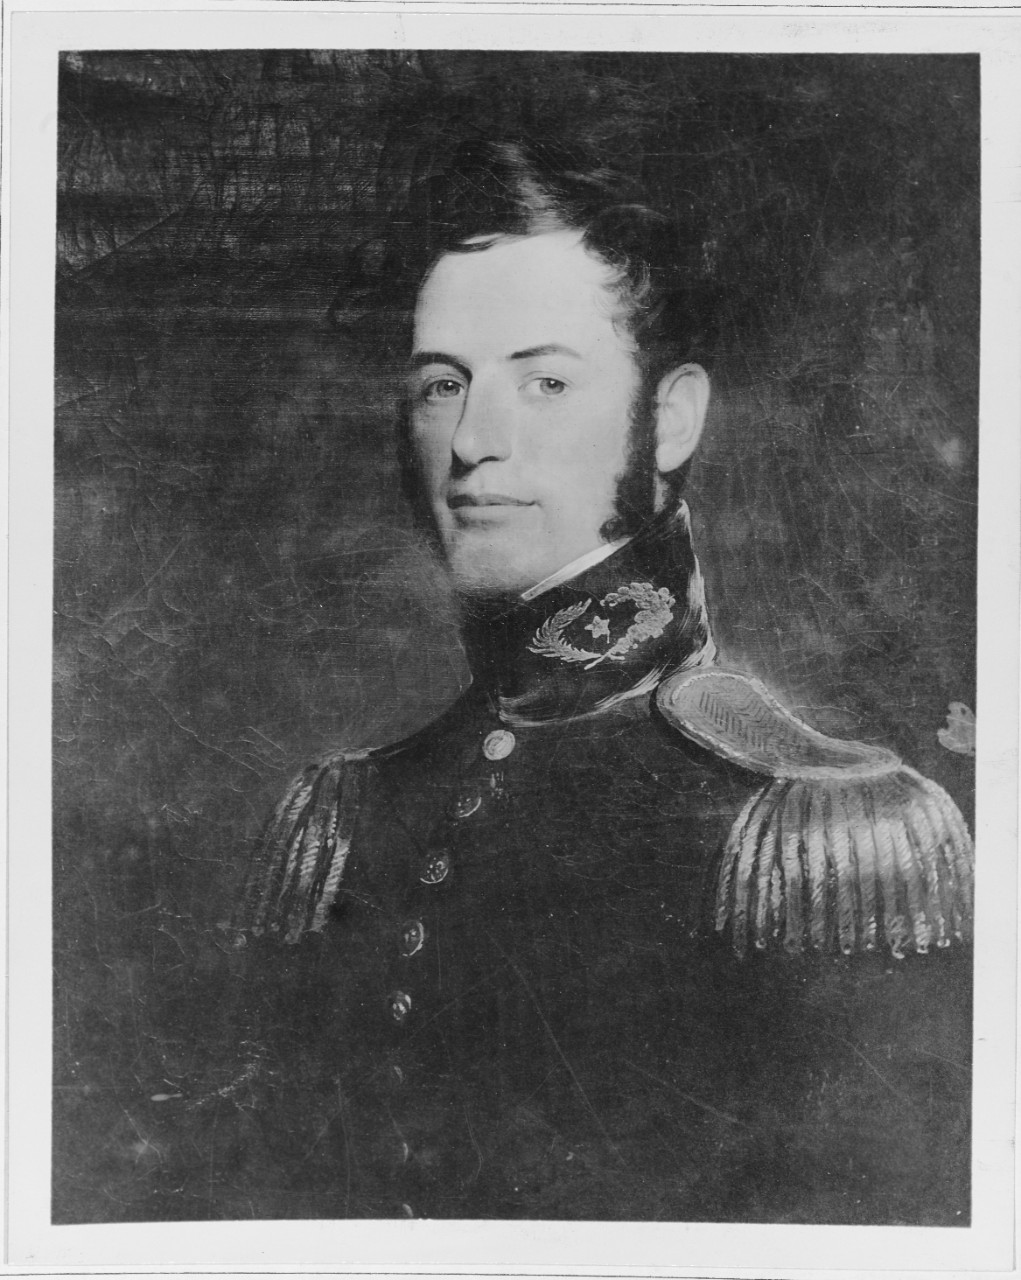 Lieutenant Robert E. Lee